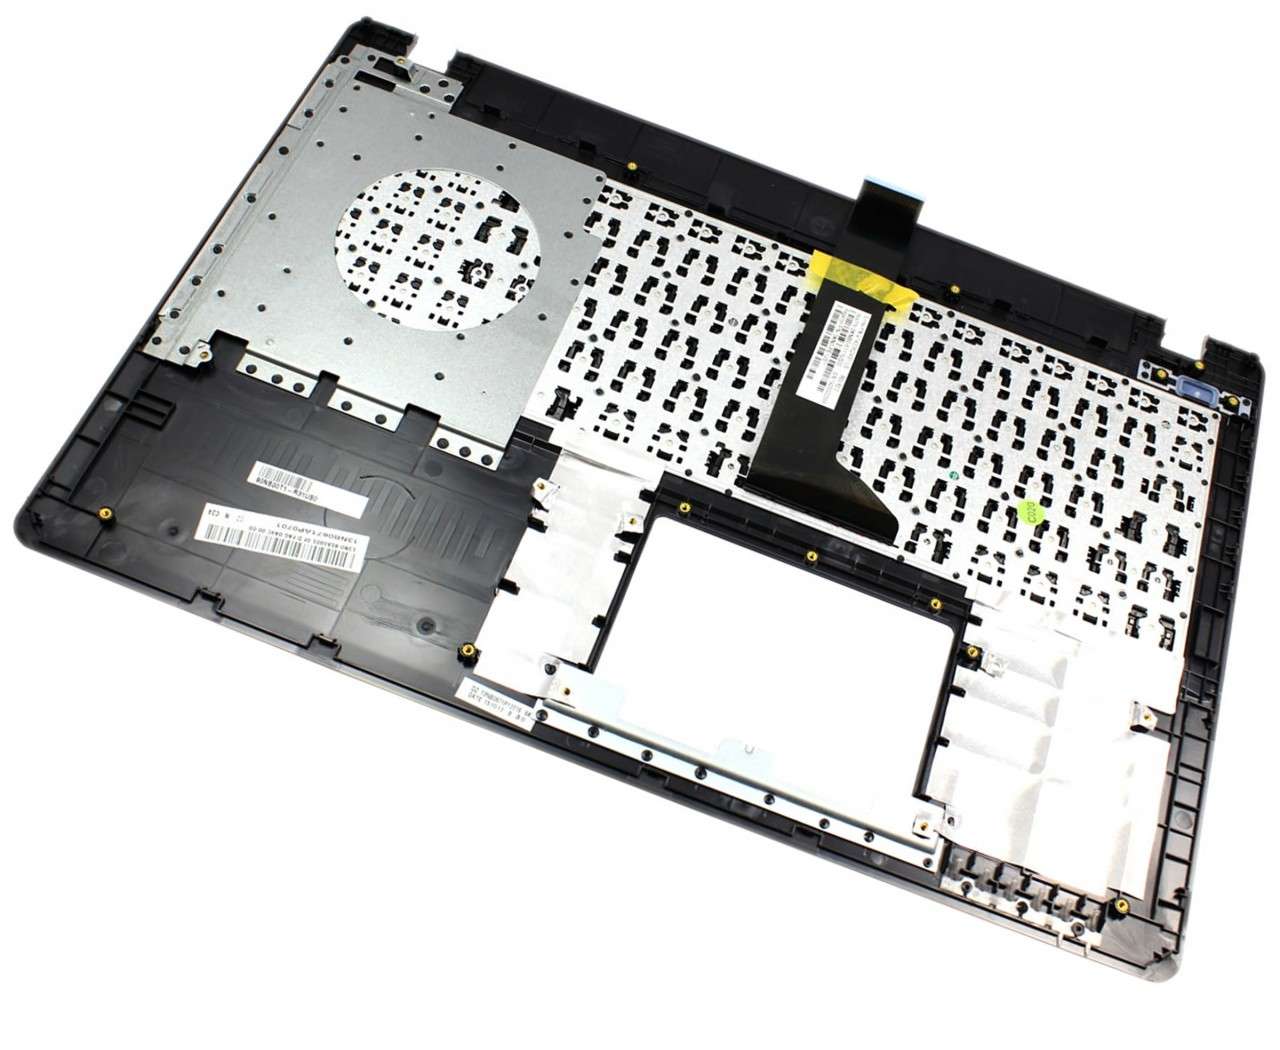 Tastatura Asus D552JK neagra cu Palmrest argintiu